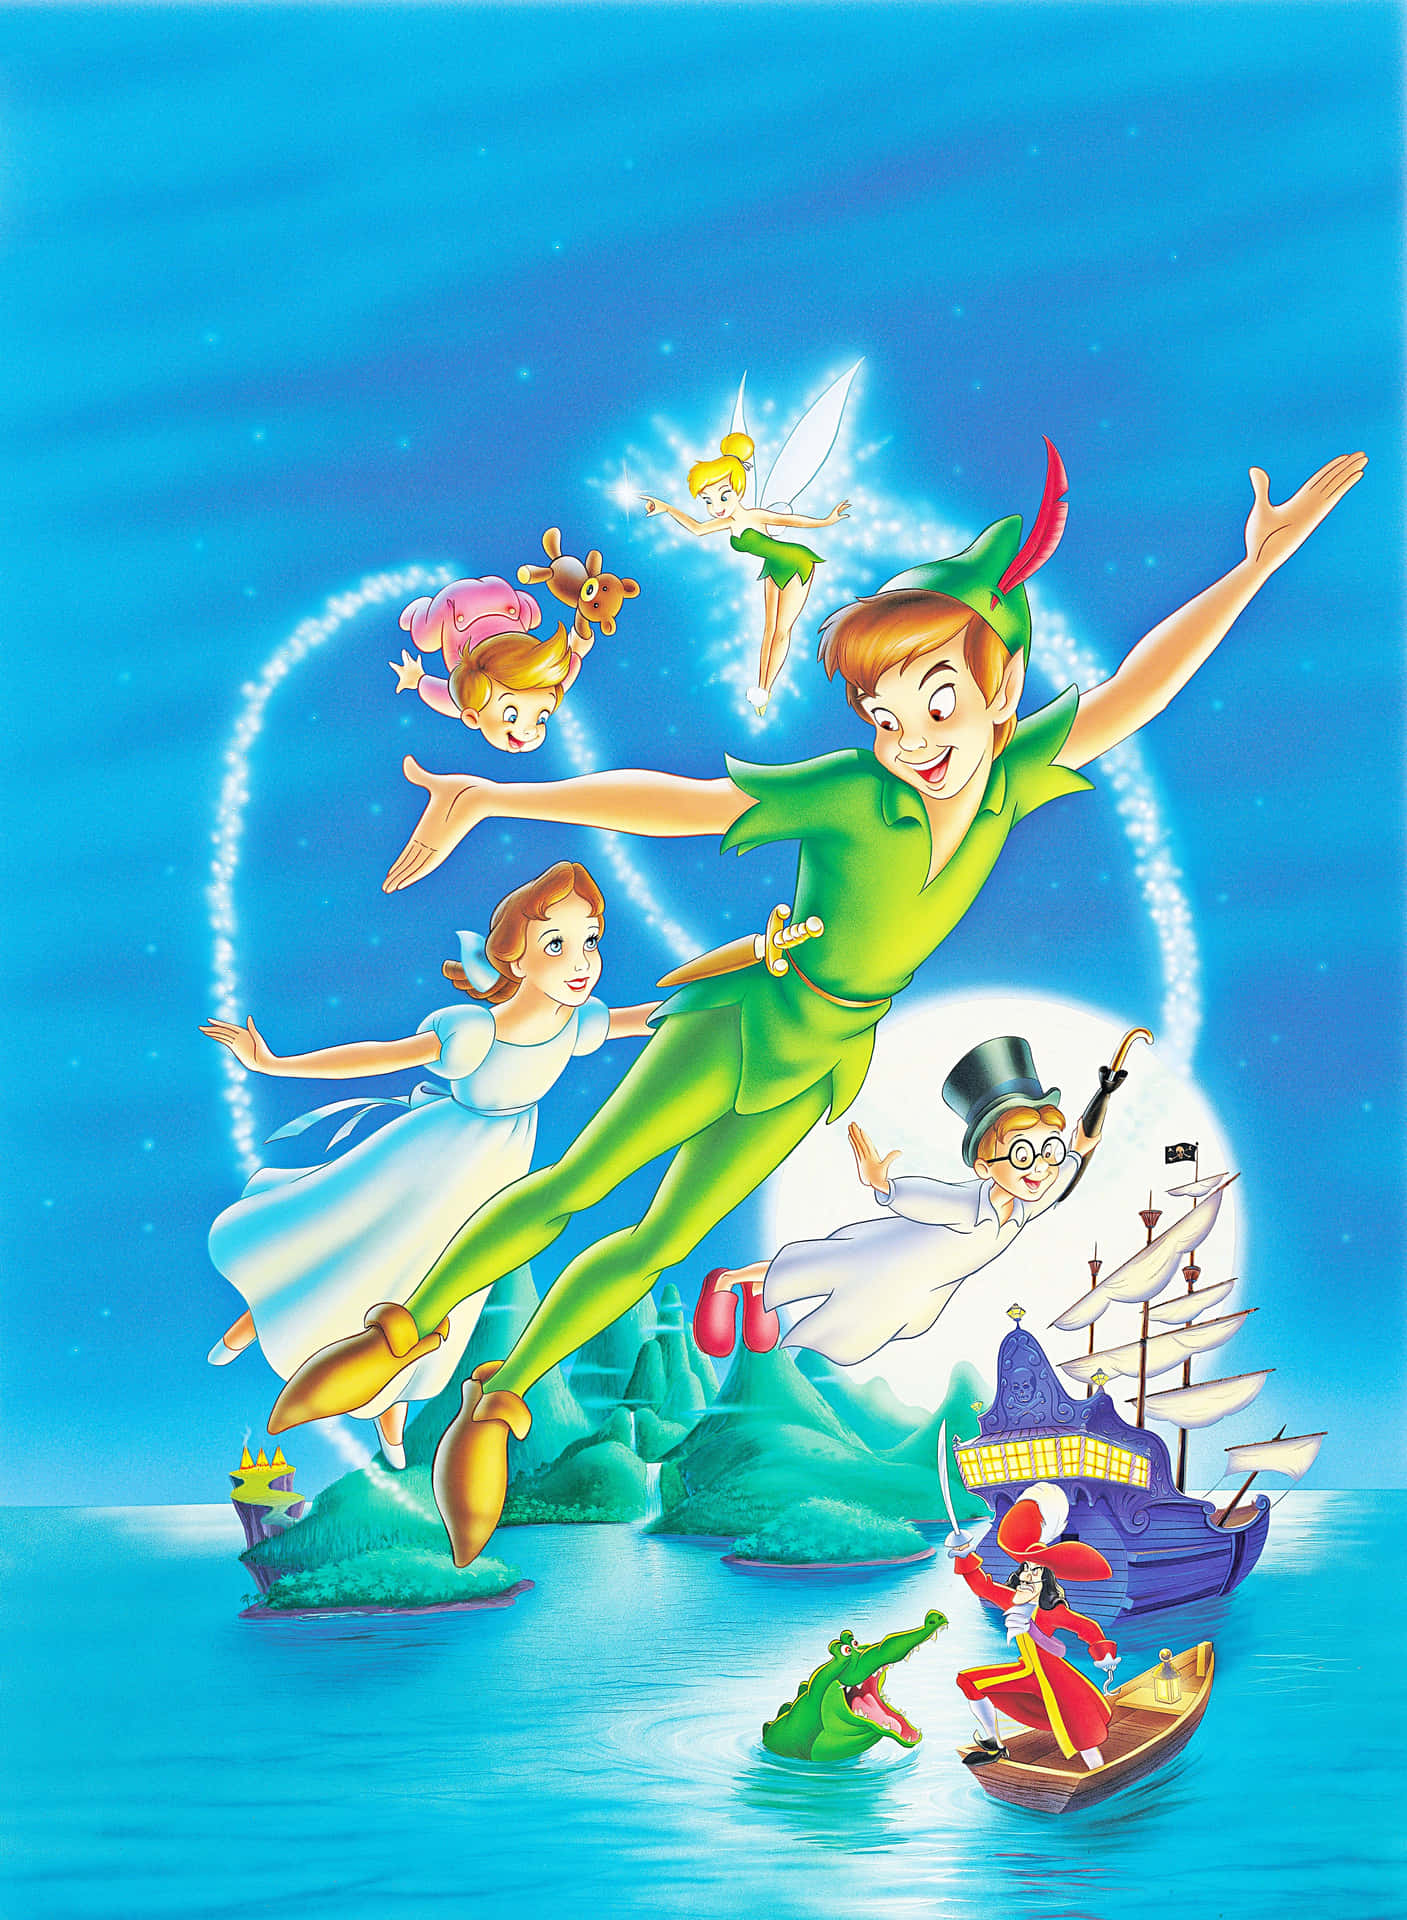 Sfondodi Peter Pan